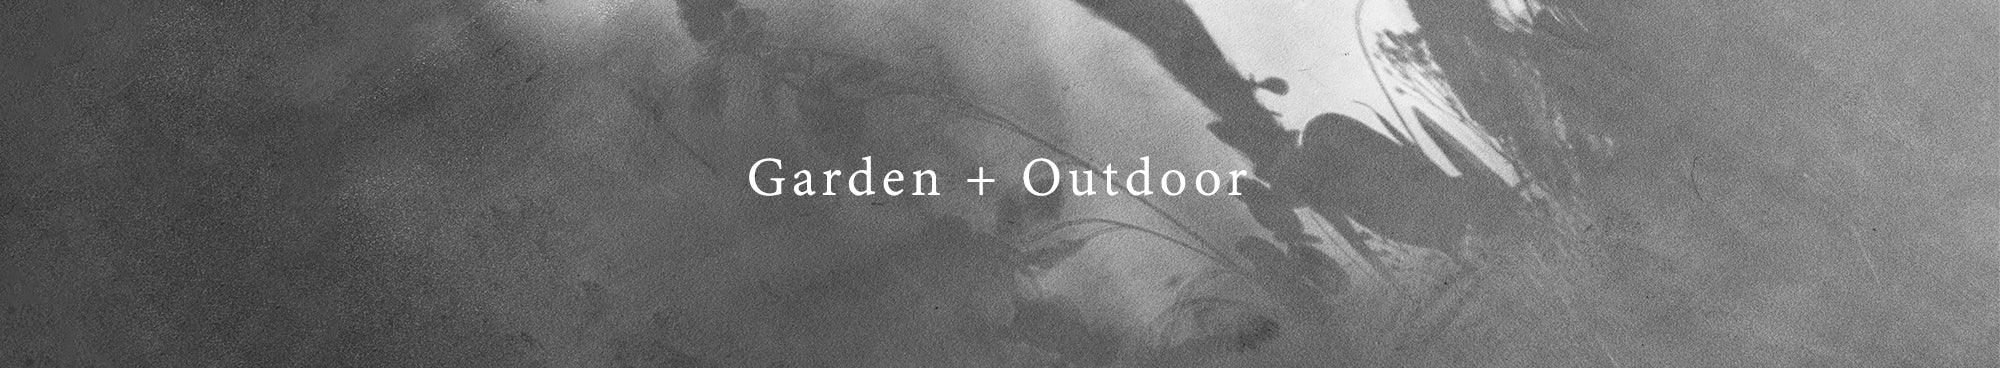 Garden + Outdoor - Rikumo